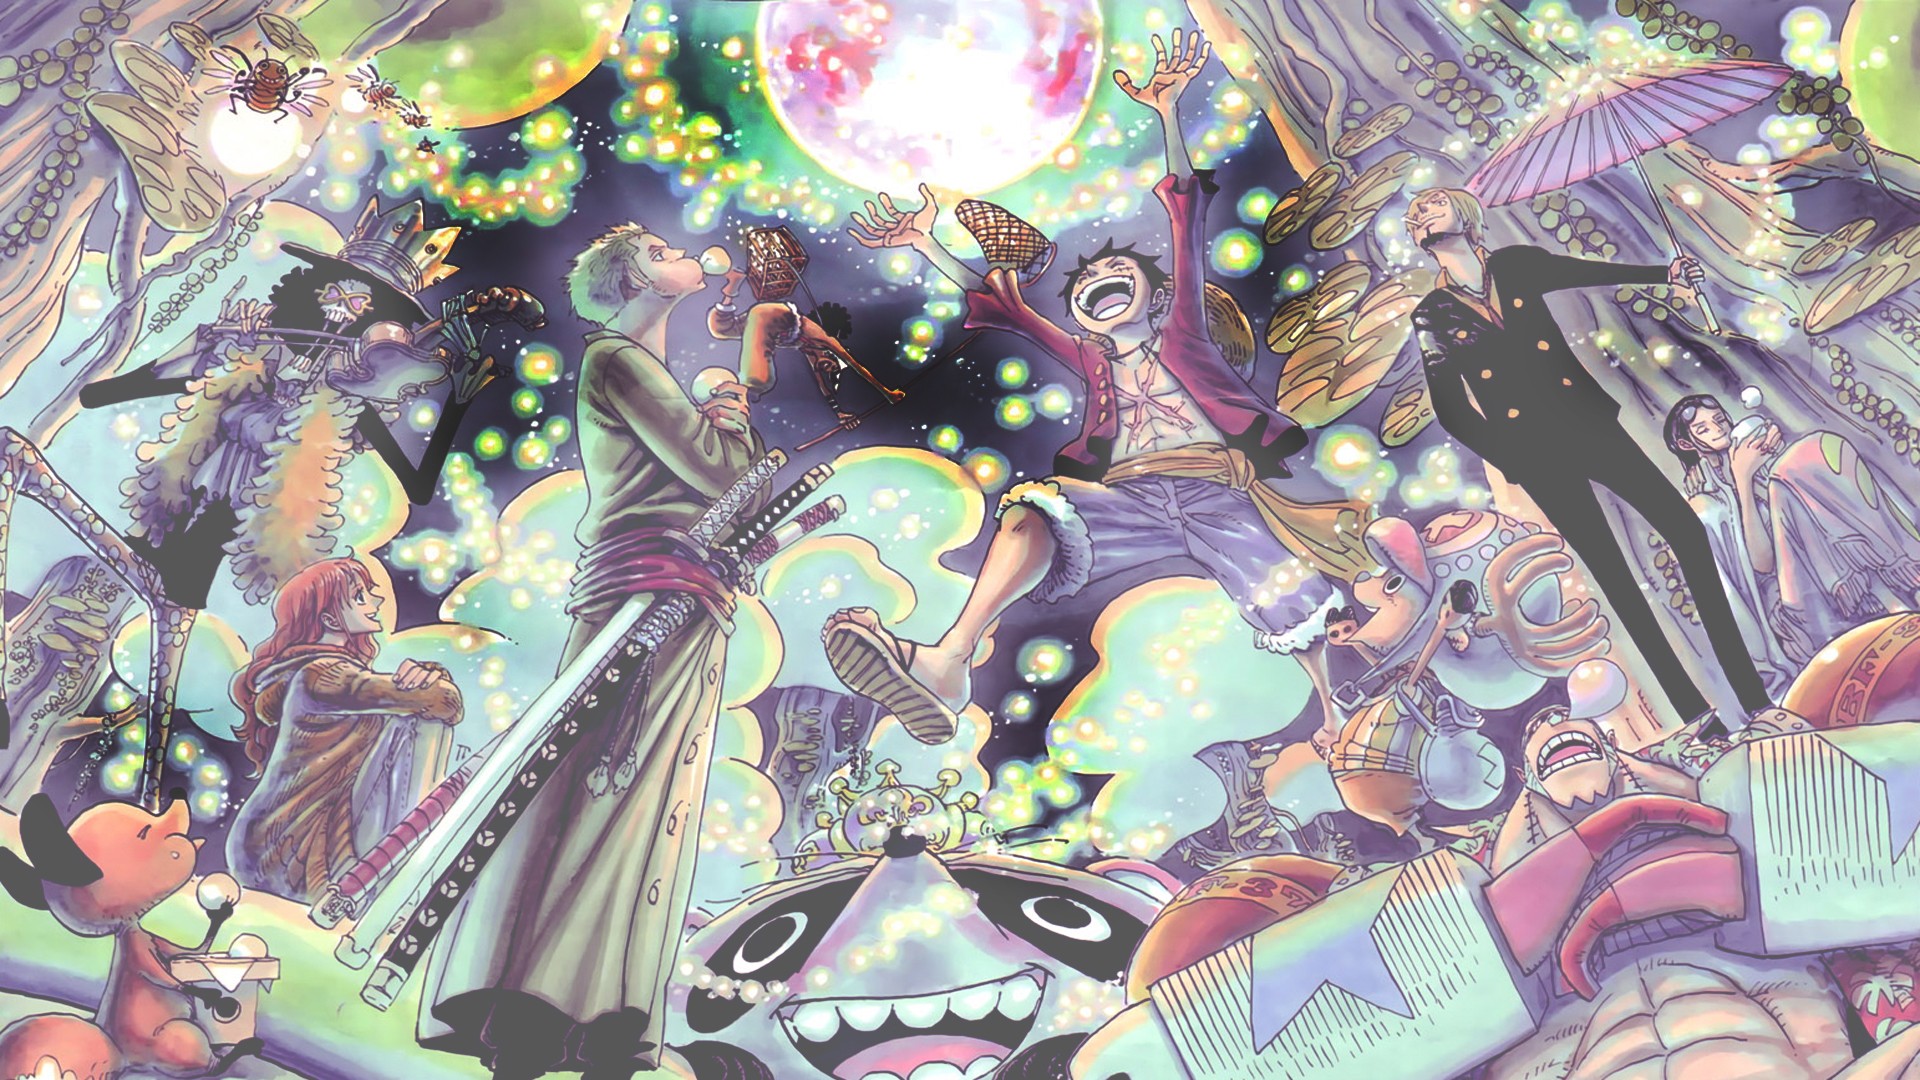 Anime characters from One Piece: Brook, Nami, Zoro, Usopp, Luffy, Chopper, Sanji, Franky, and Robin.